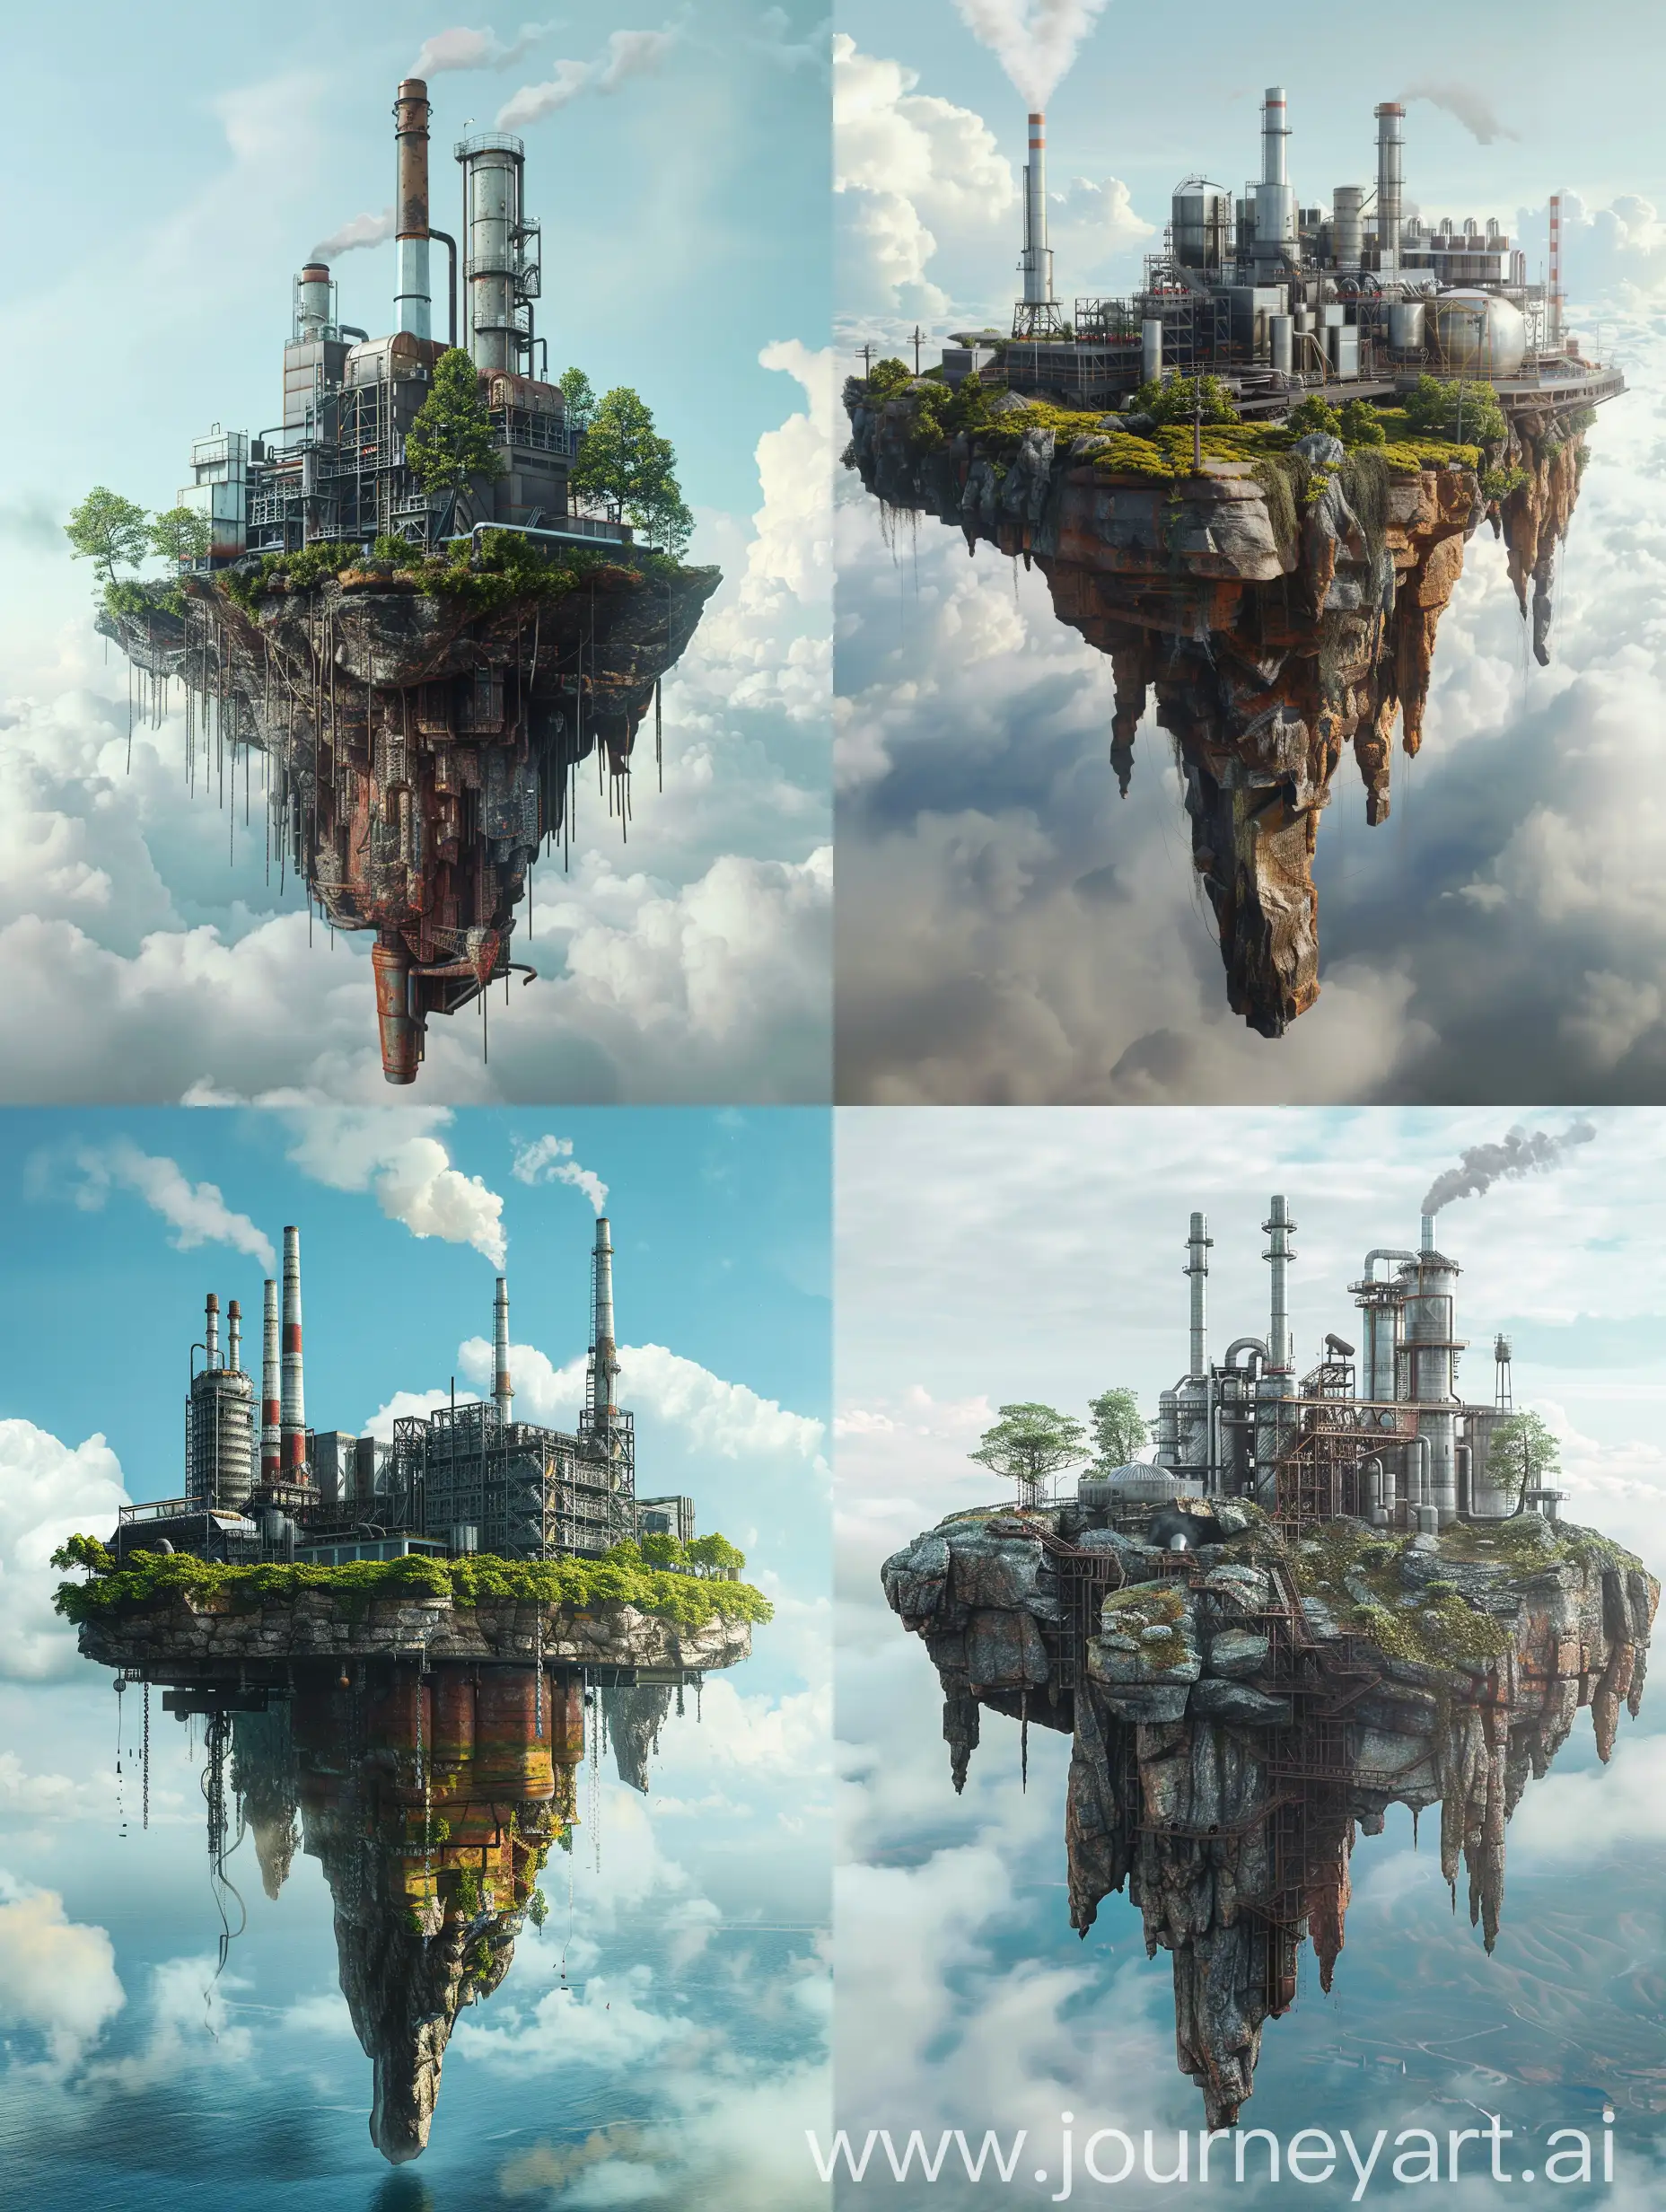 Futuristic-HighTech-Factory-on-Floating-Island